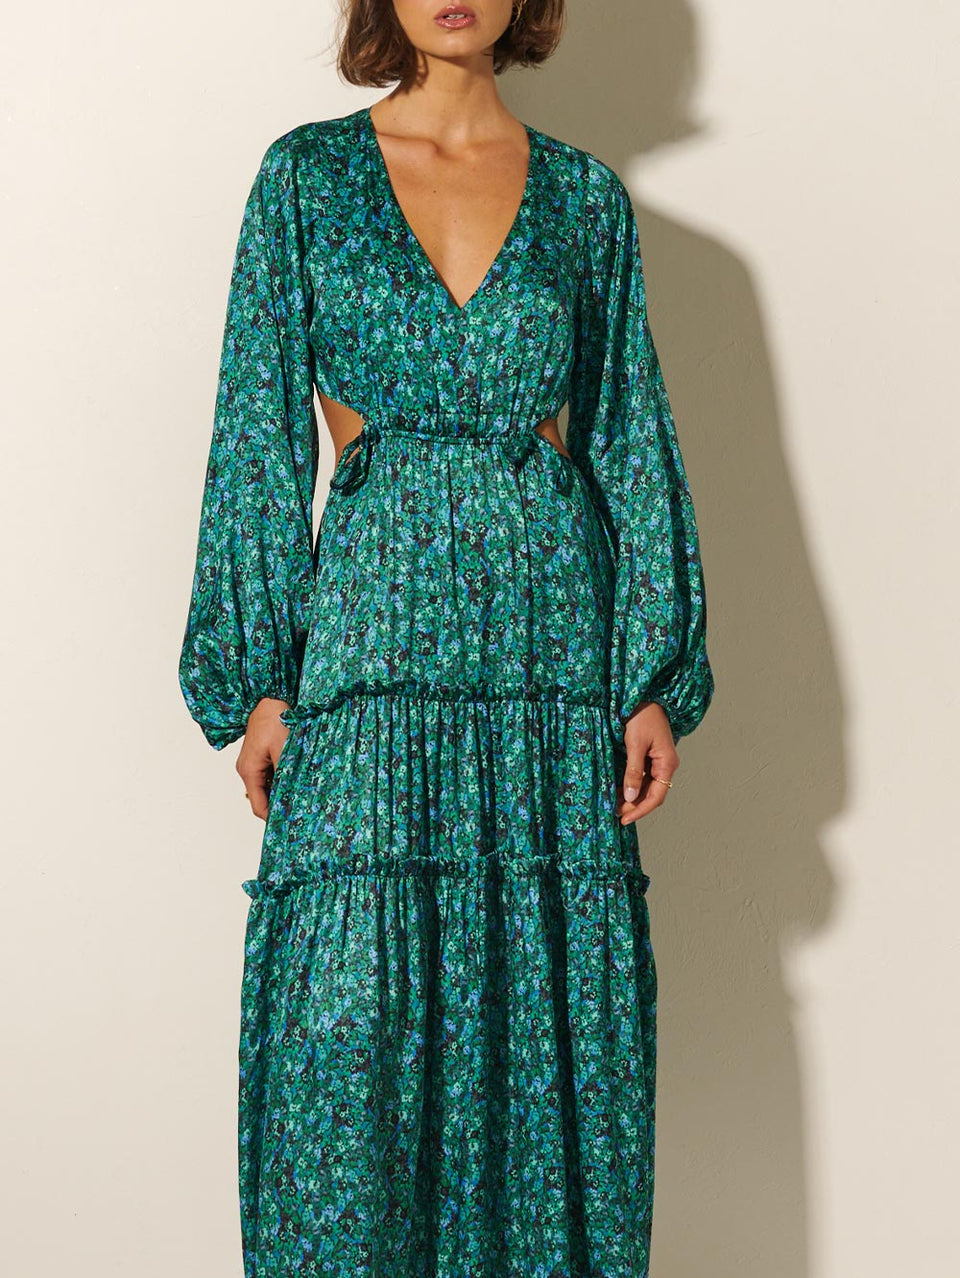 KIVARI Acacia Maxi Dress | Model wears Green Floral Maxi Dress Close Up